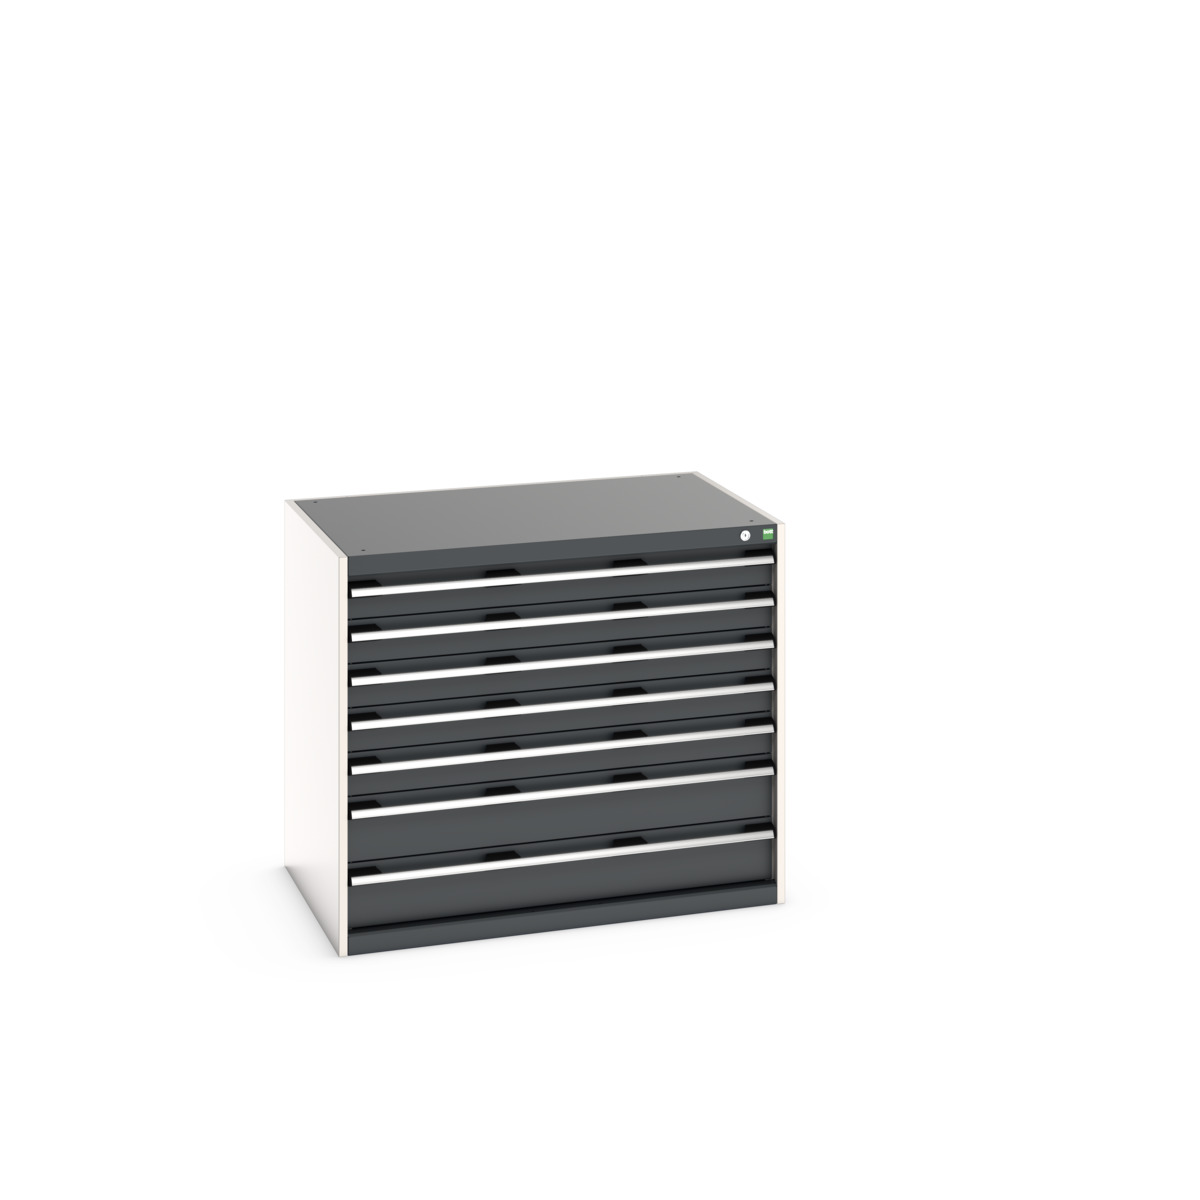 40029091. - cubio drawer cabinet